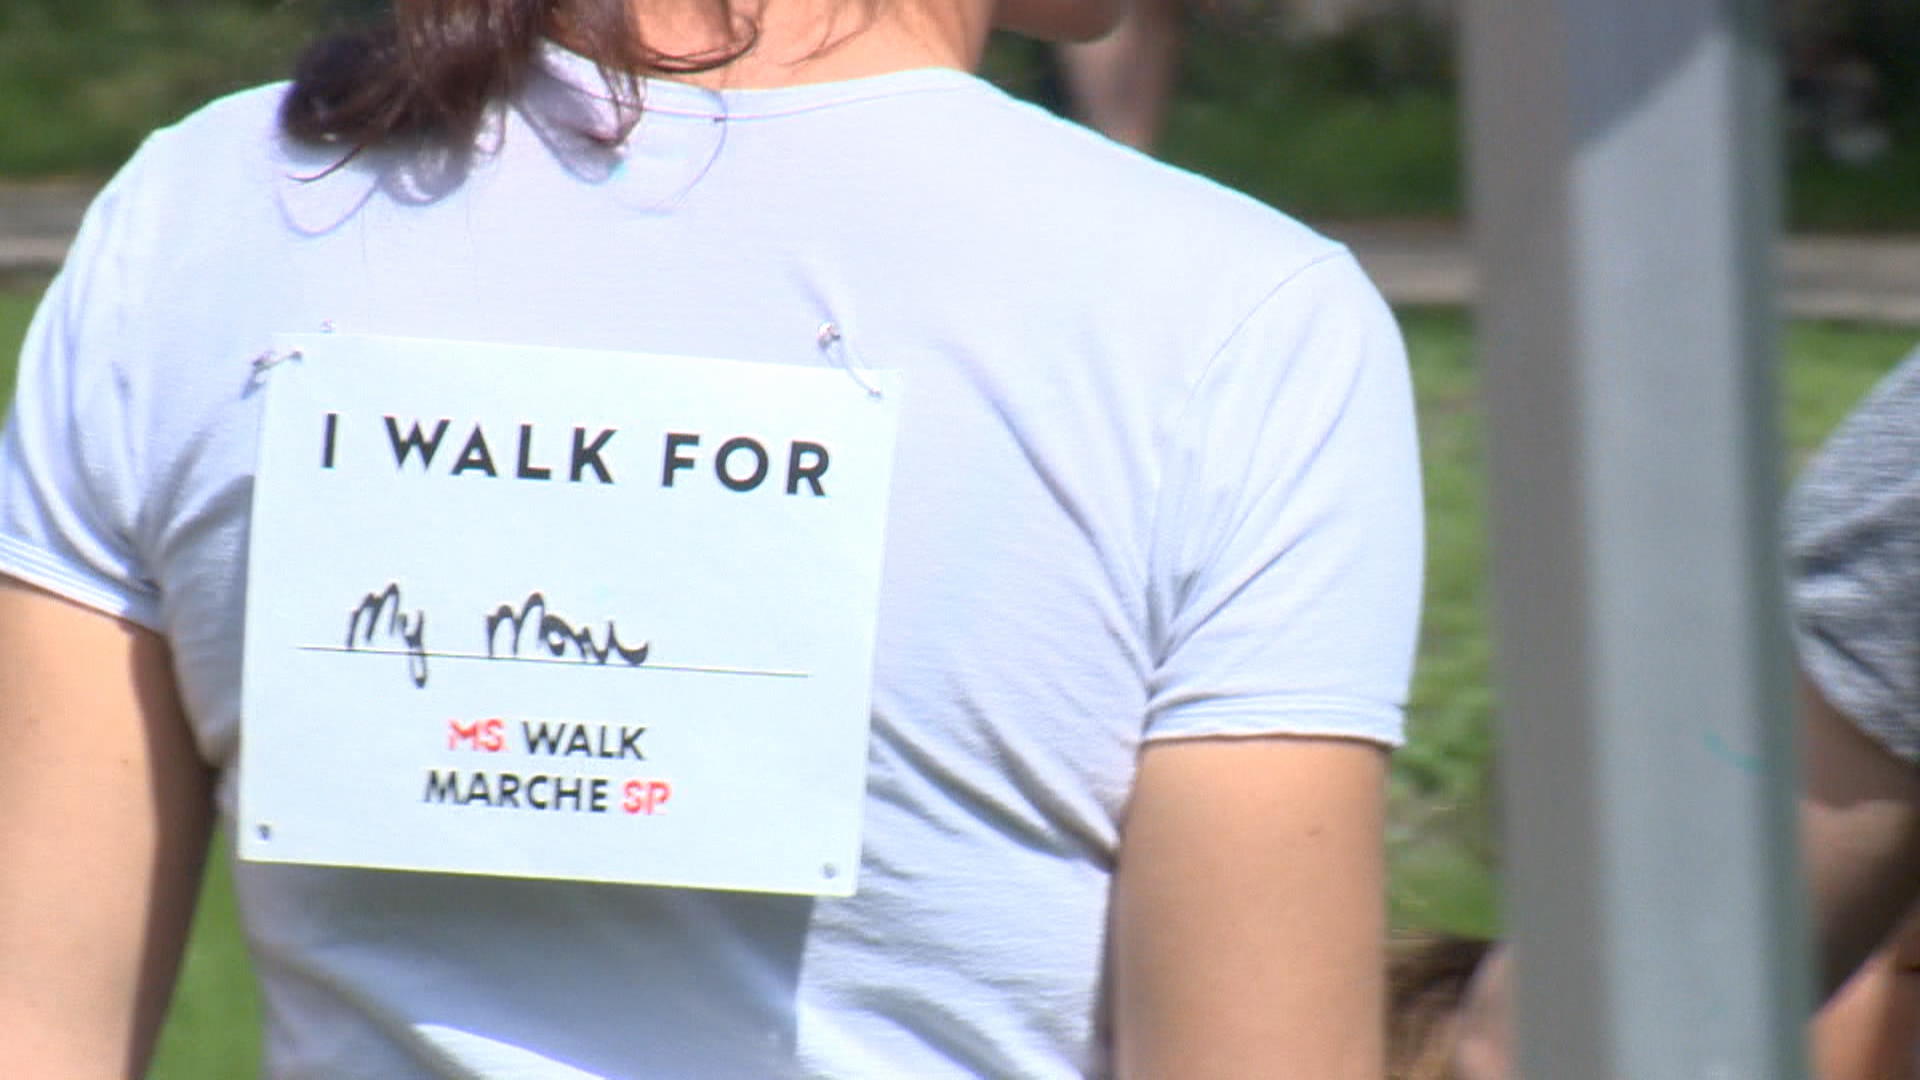 Saskatoon’s MS Walk sees restored participation